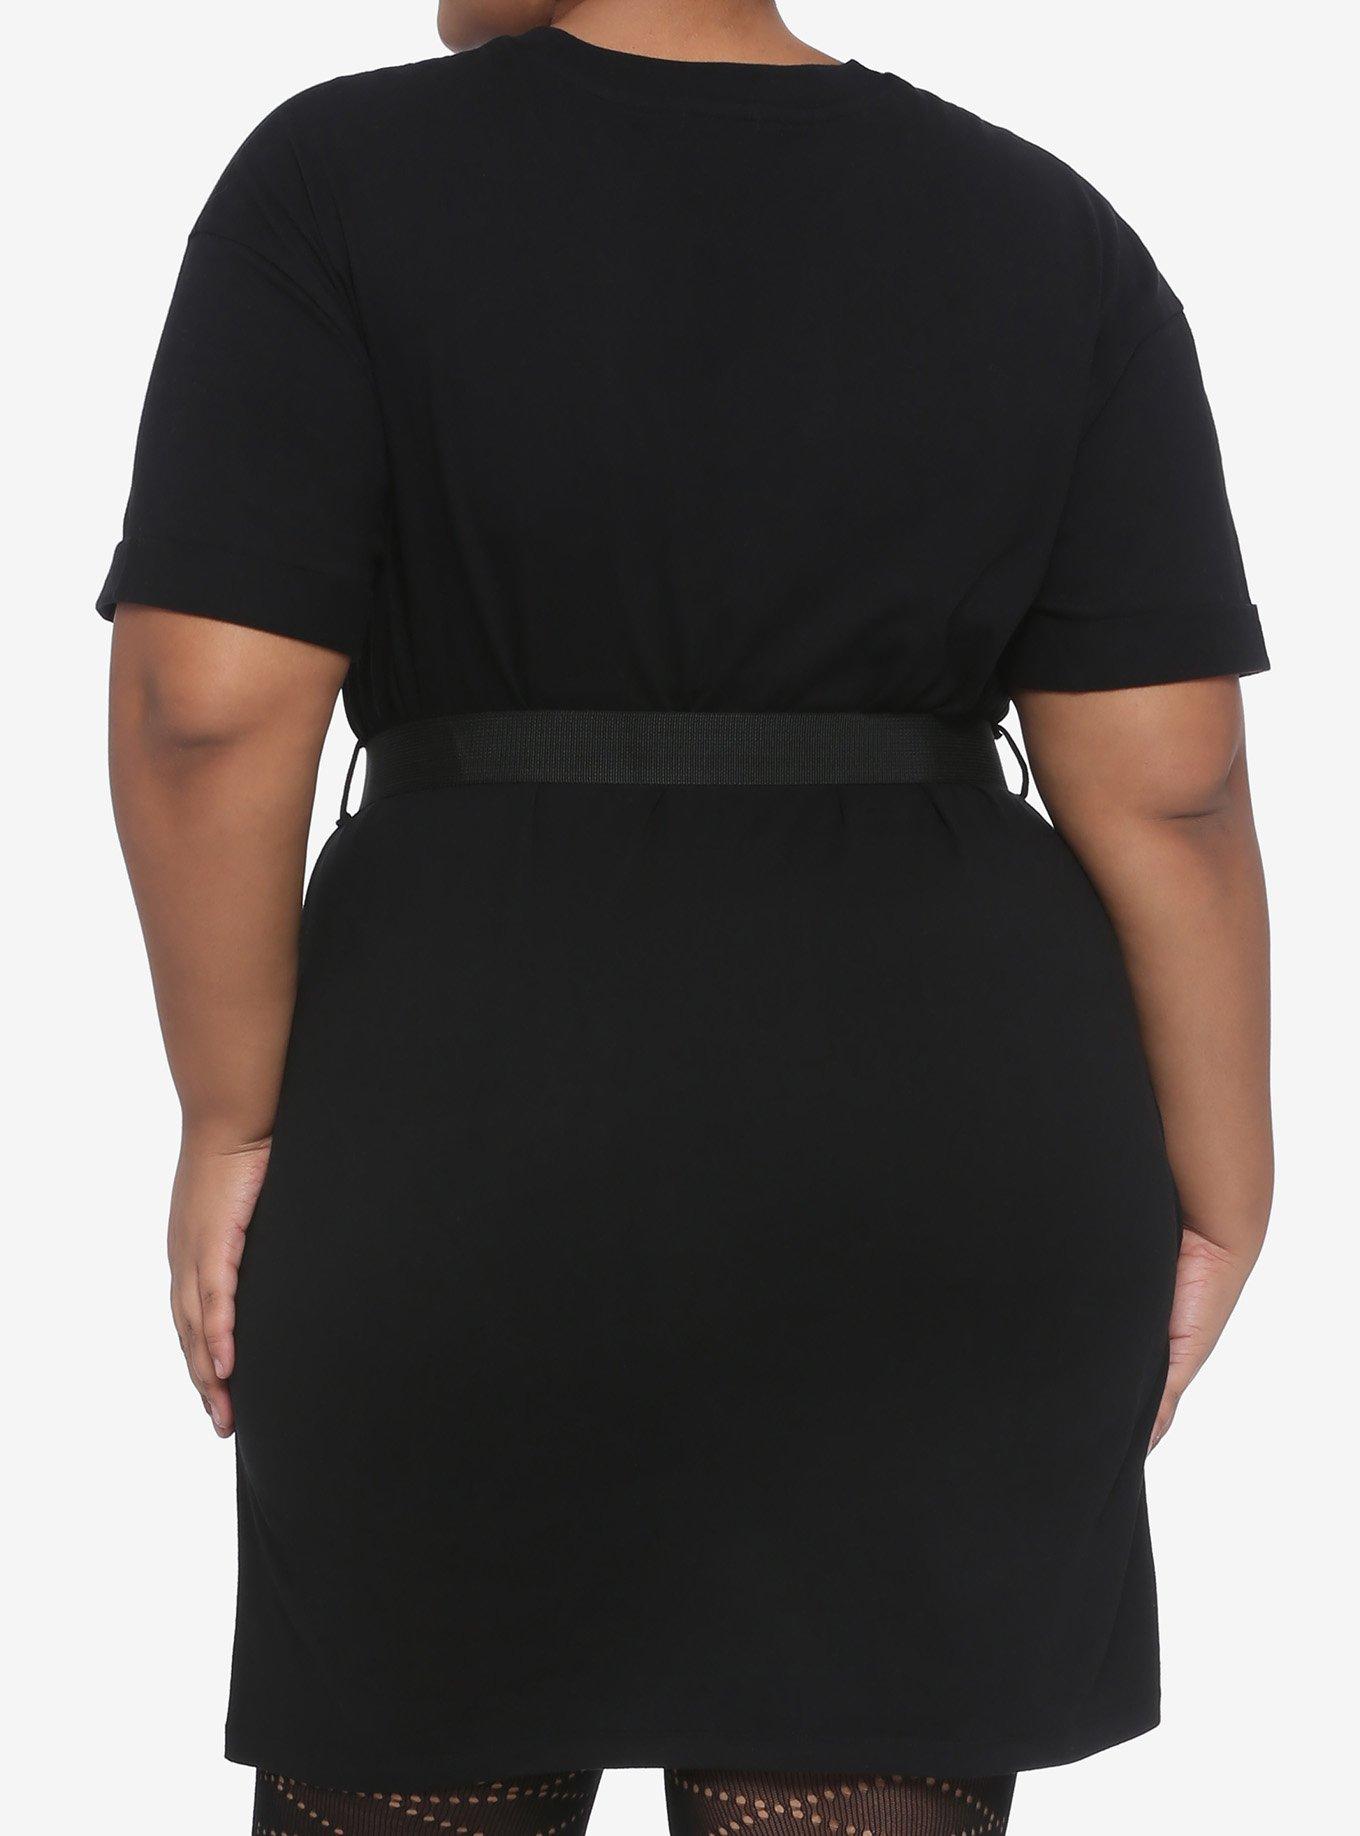 Black Belted T-Shirt Dress Plus Size, BLACK, alternate